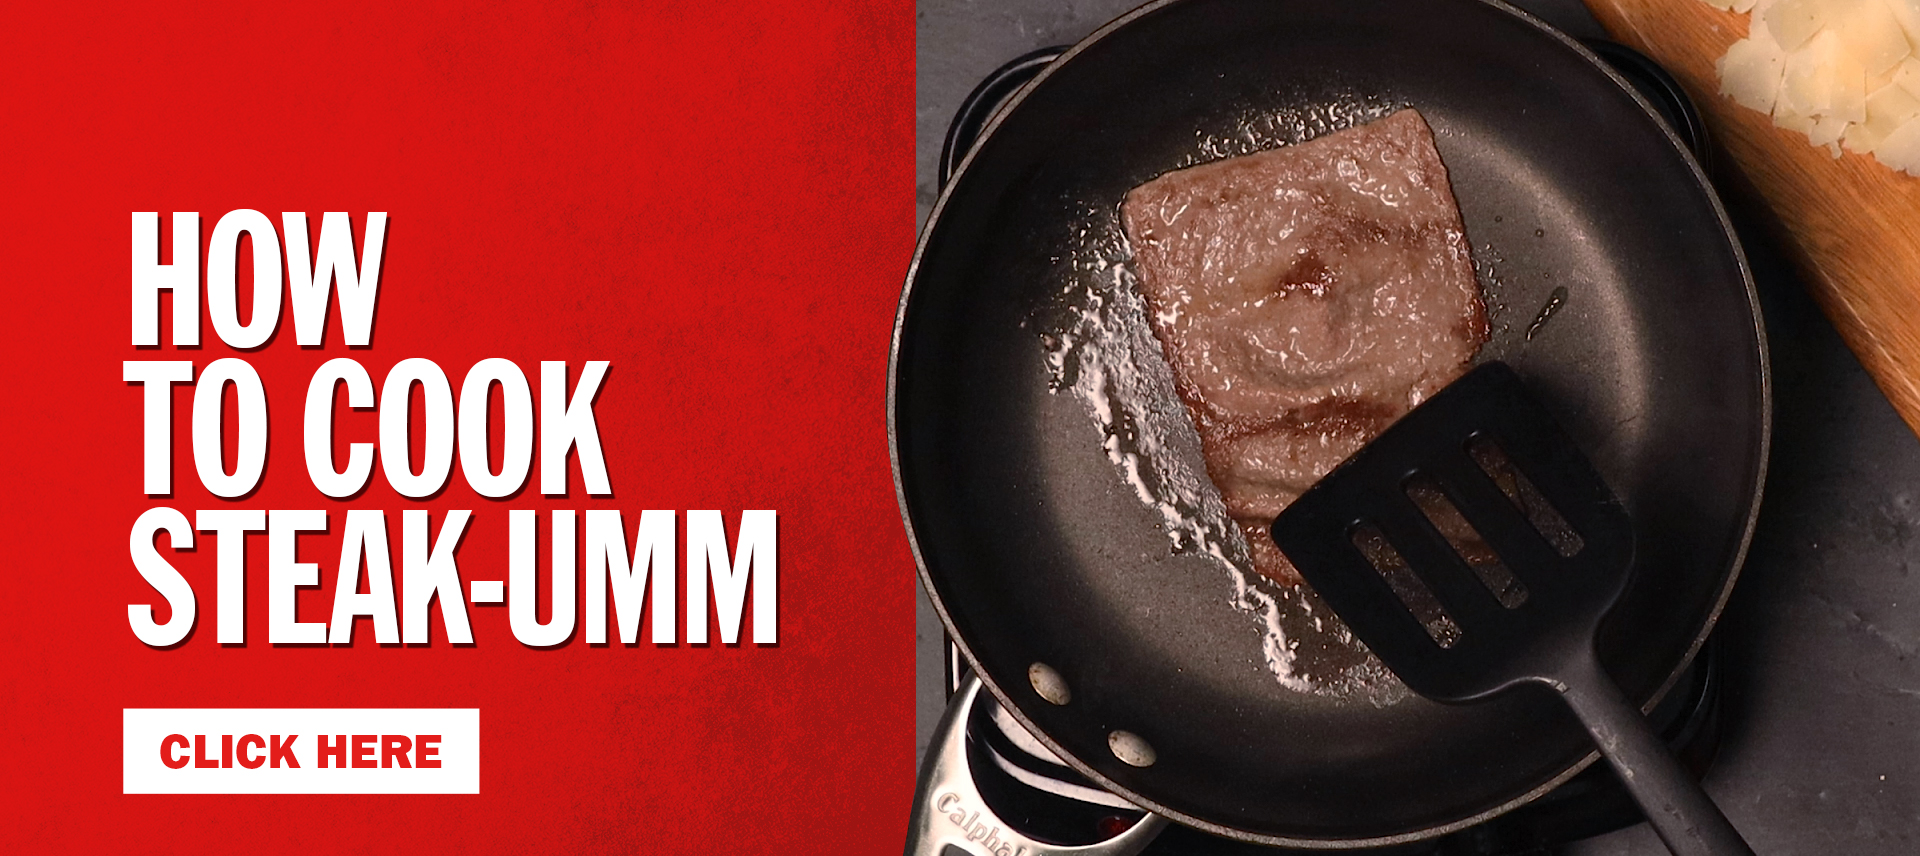 How to Cook Steak-umm